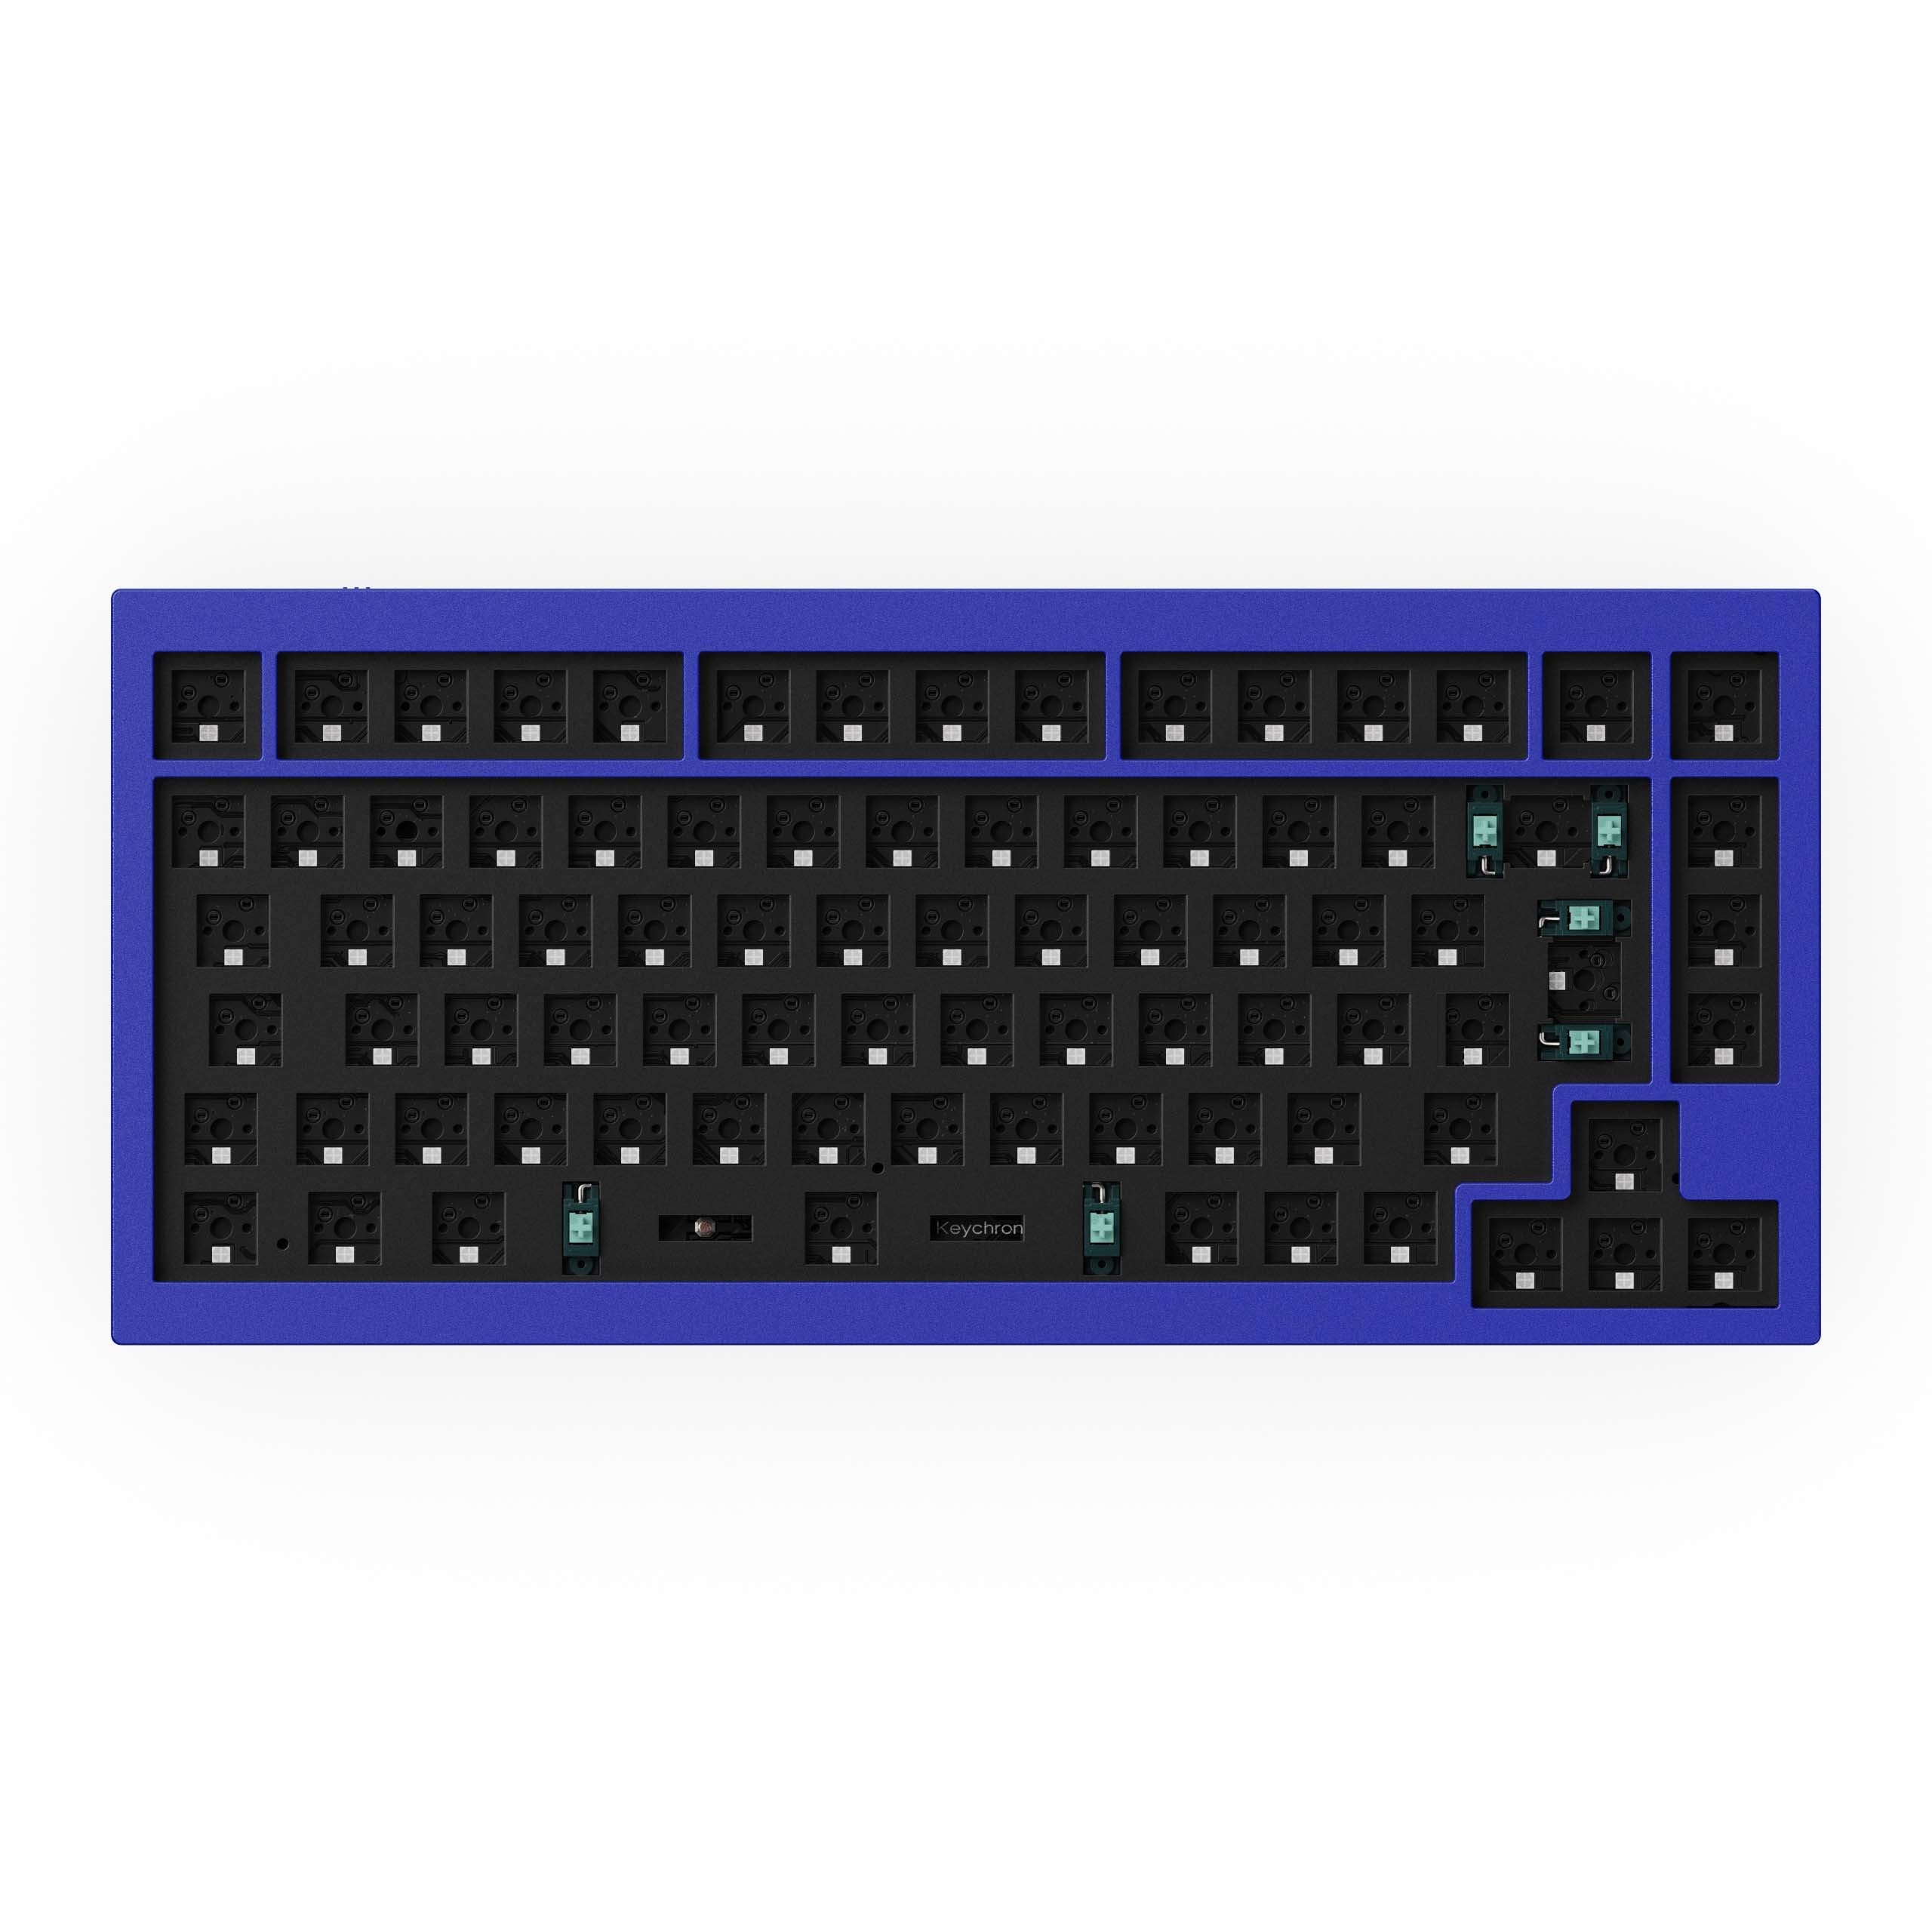 Keychron-Q1-75-percent-QMK-Custom-Mechanical-Keyboard-version-2-barebone-ISO-blue